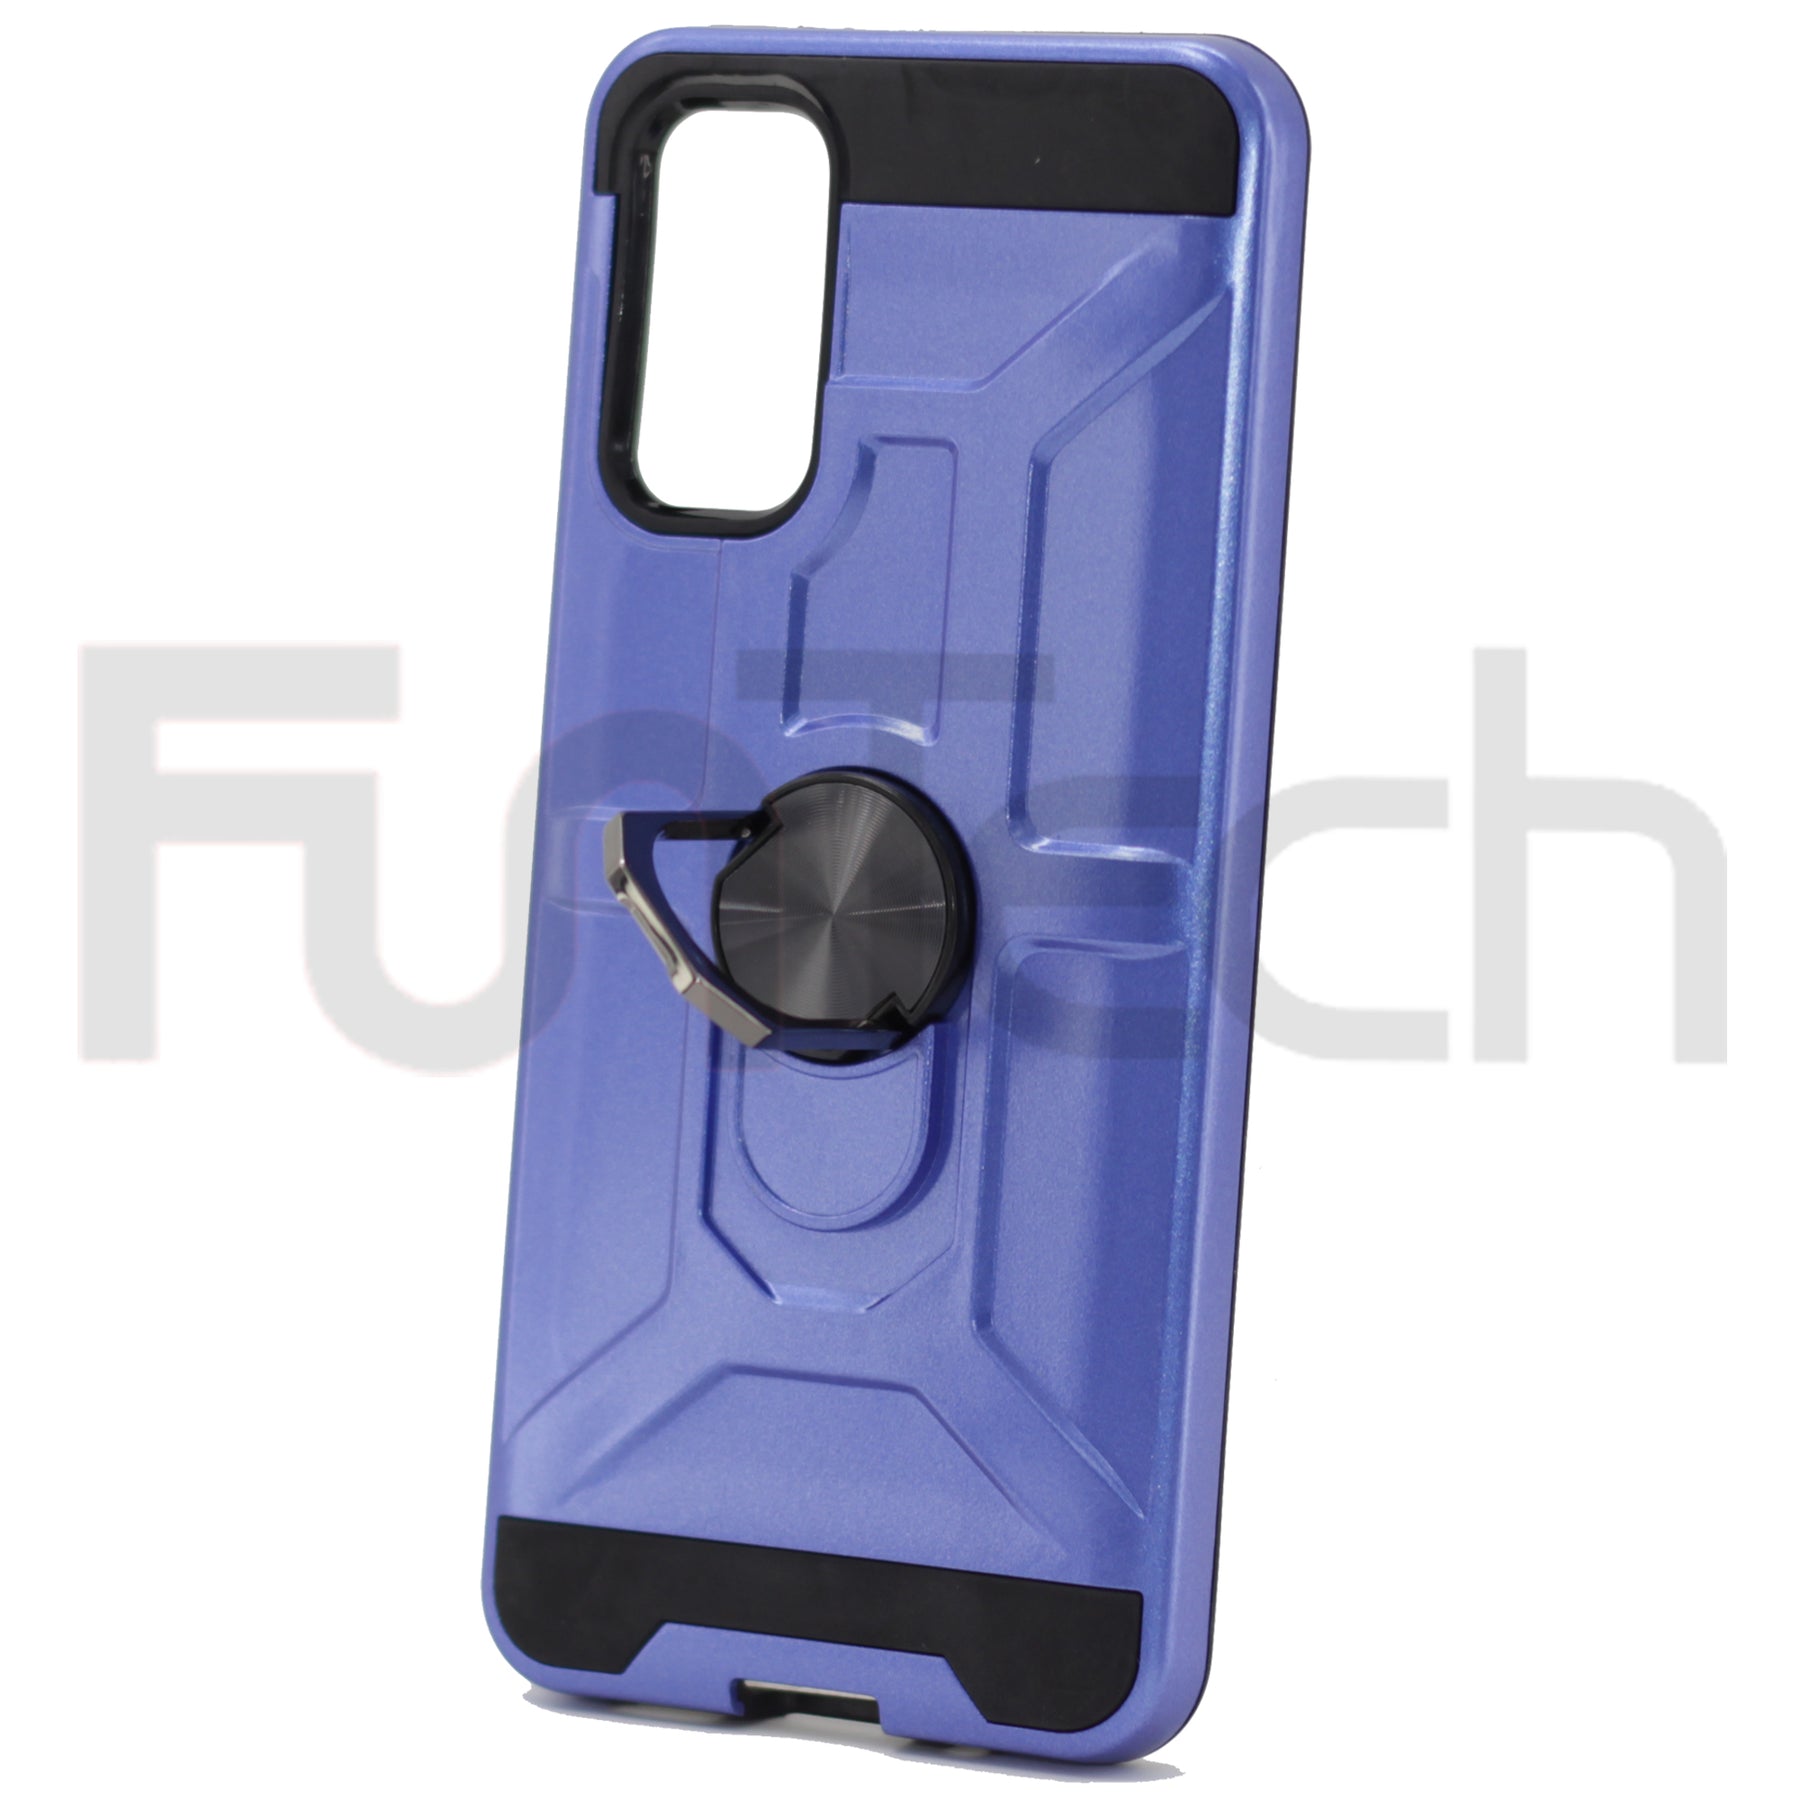 Samsung S20 Case, Color Blue